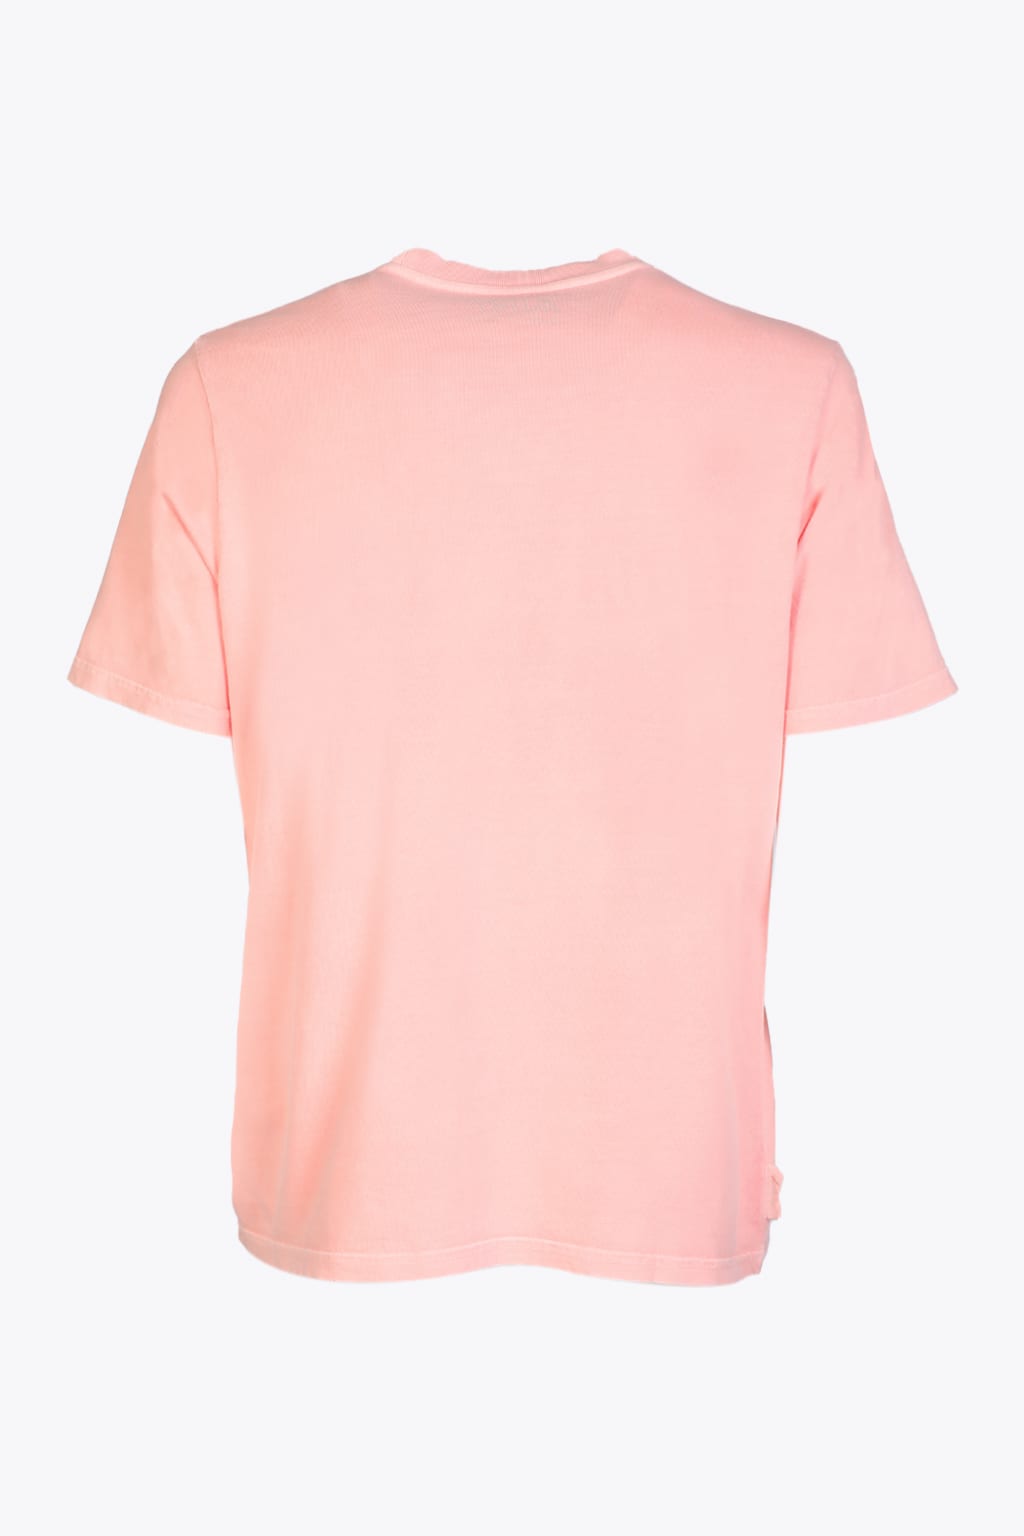 Shop Autry T-shirt Supervintage Man Tinto Pink Pink Cotton Garment Dyed T-shirt